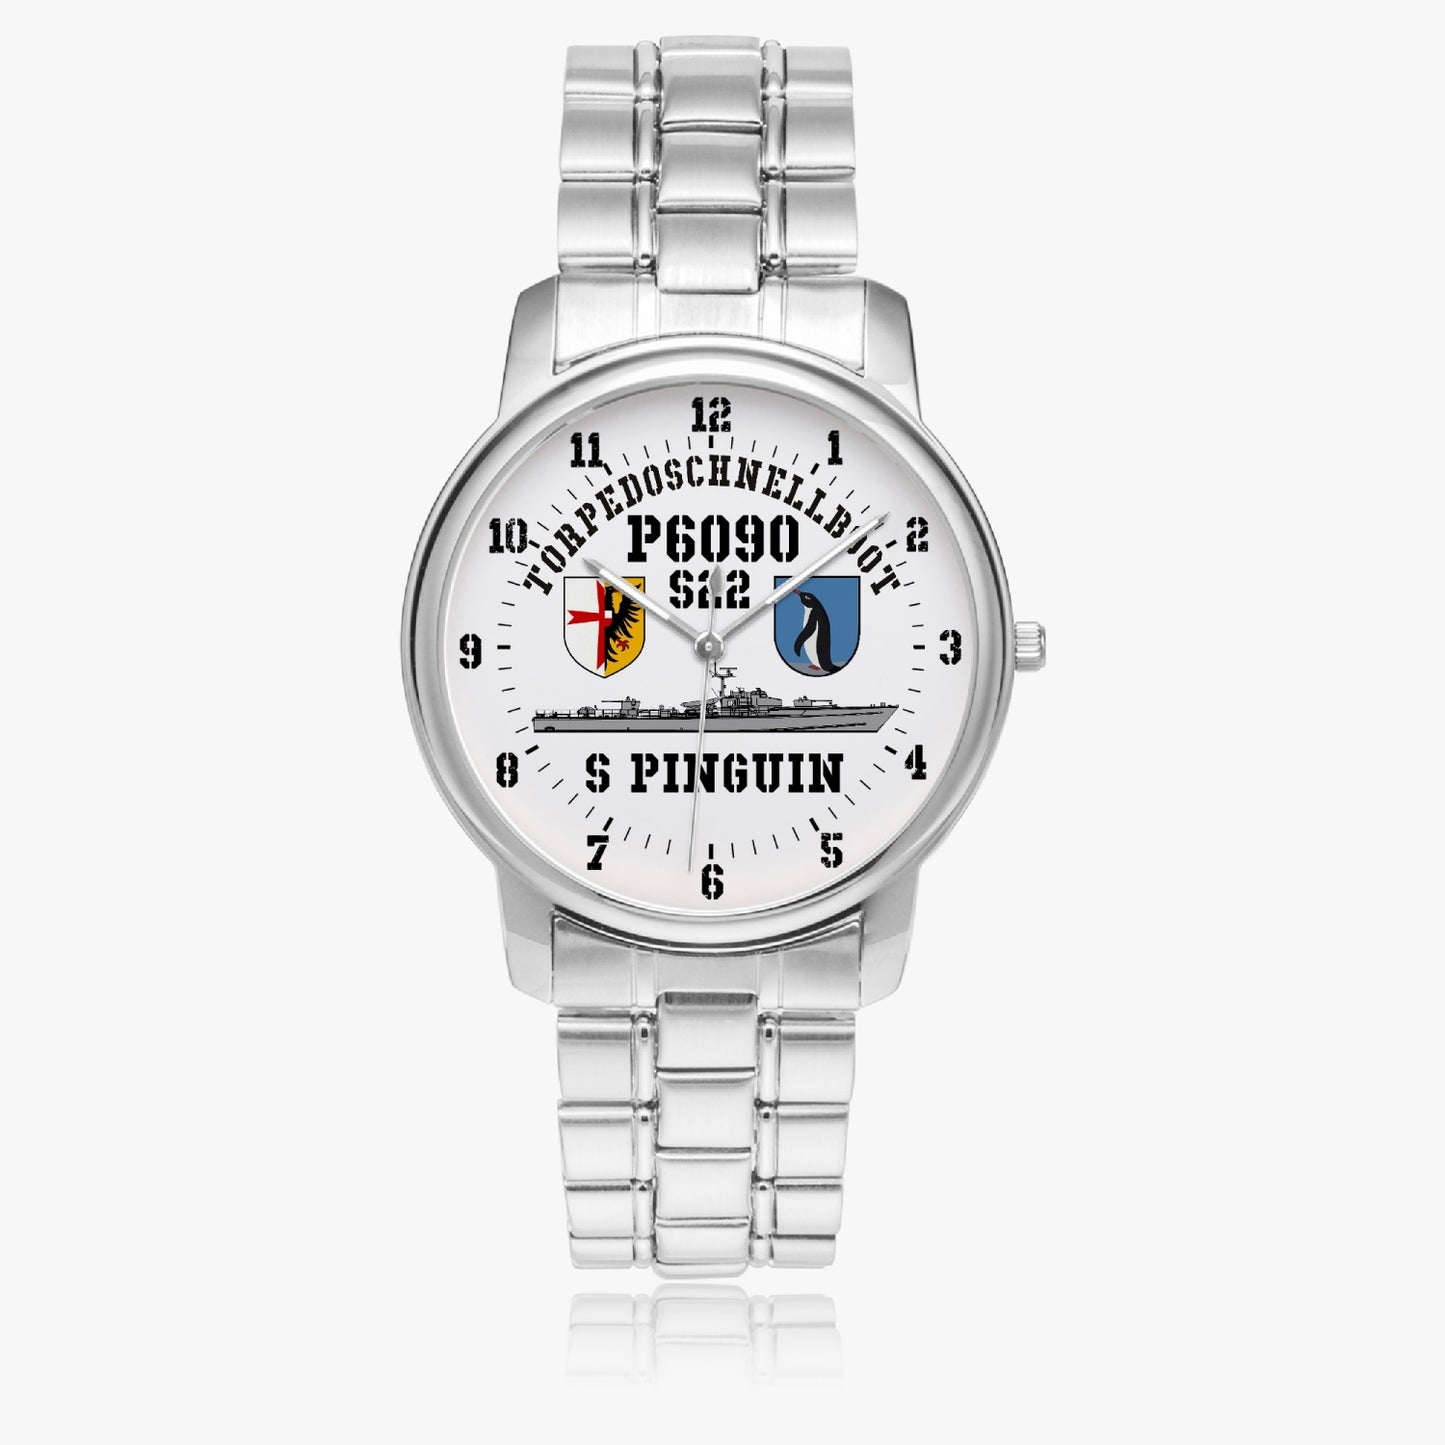 Armbanduhr P6090 S22 S PINGUIN